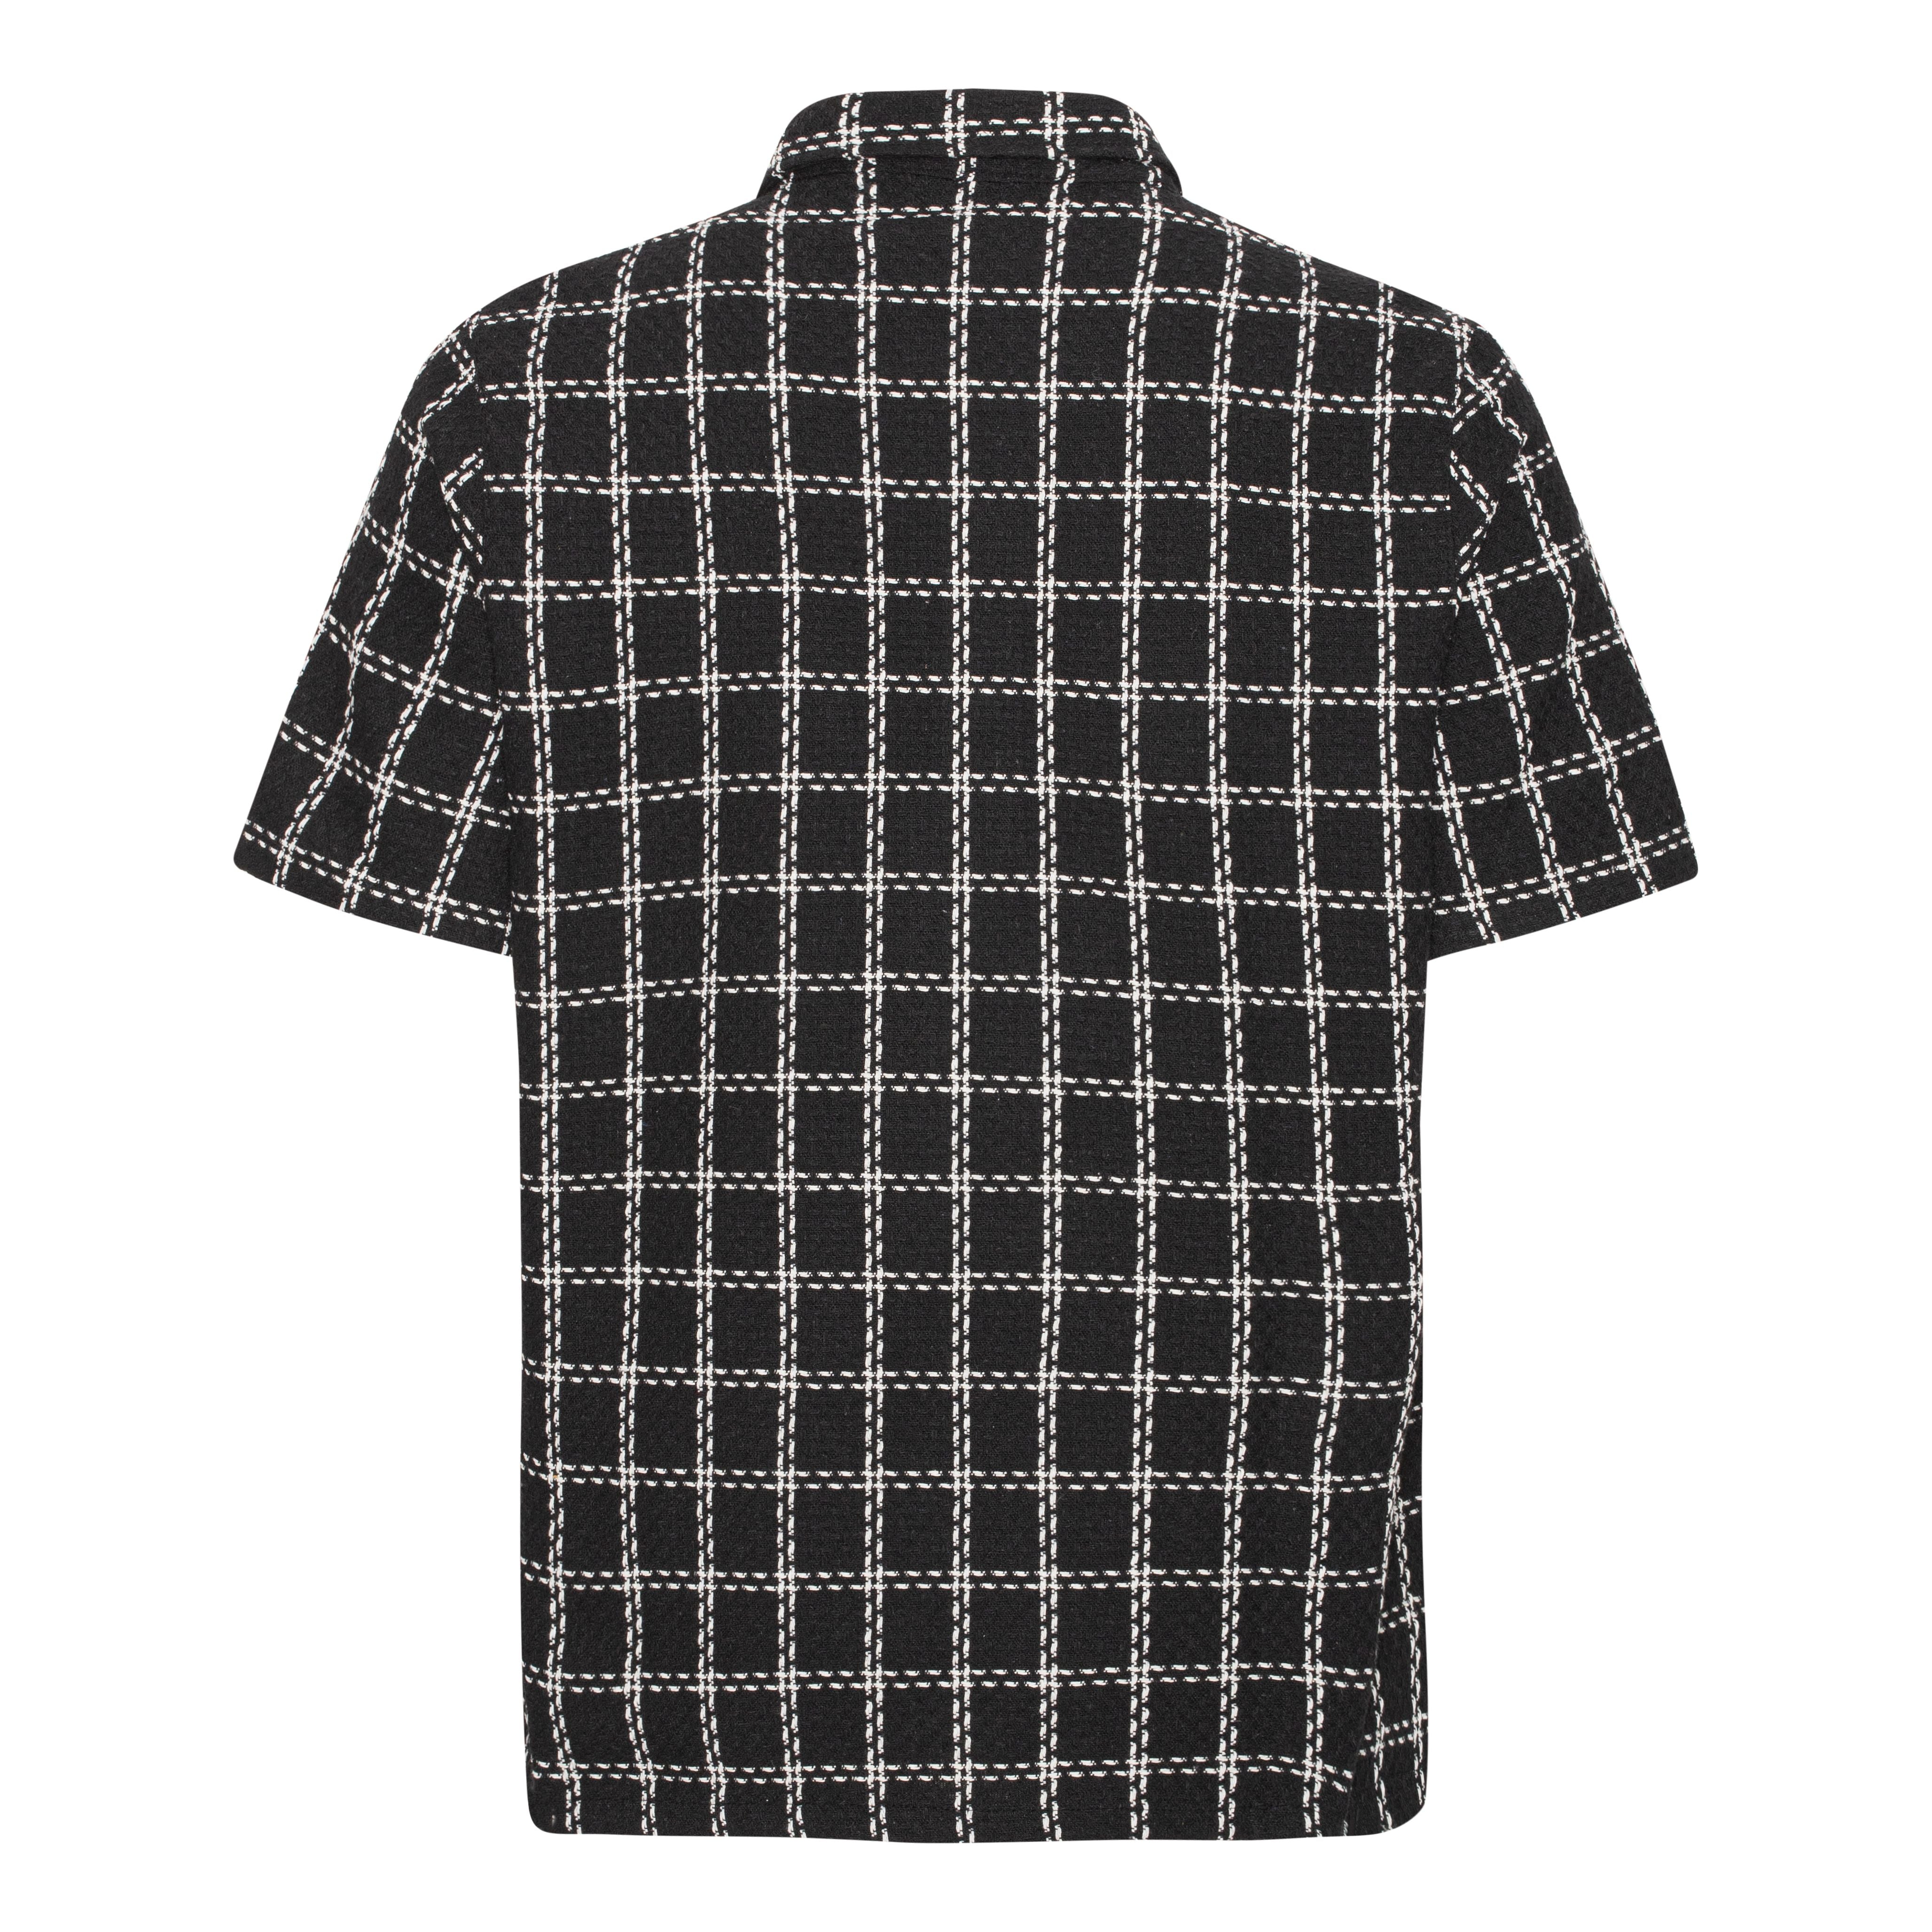 Black short-sleeved checkered shirt